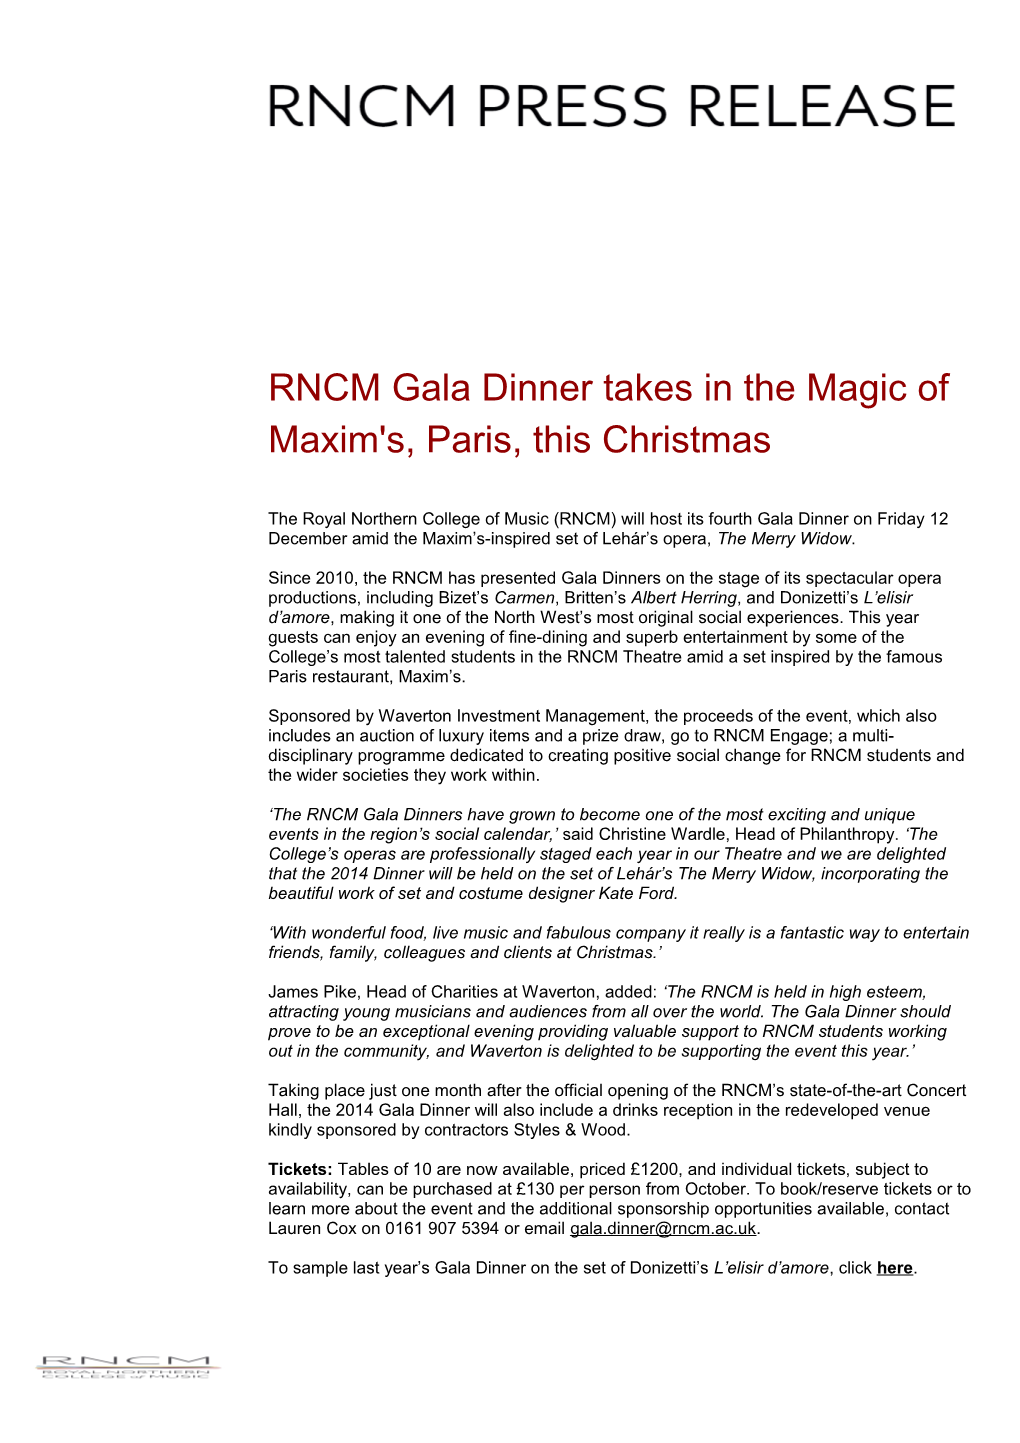 RNCM Gala Dinner Takes in the Magic of Maxim's, Paris, This Christmas